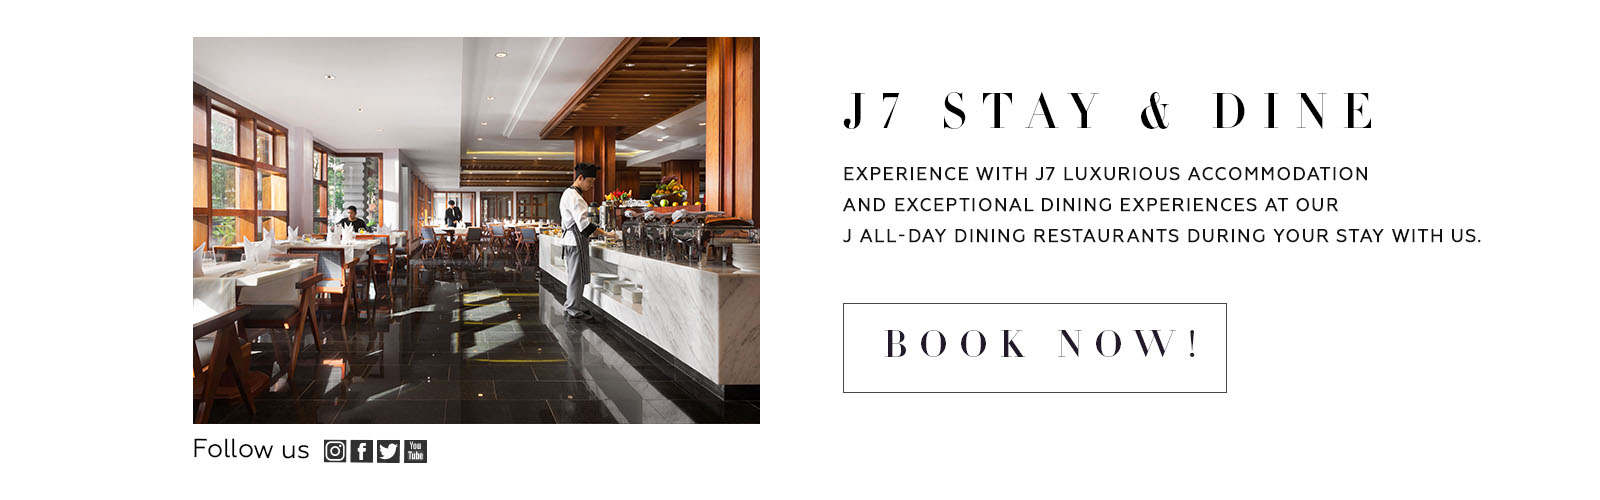 J7 Stay & Dine